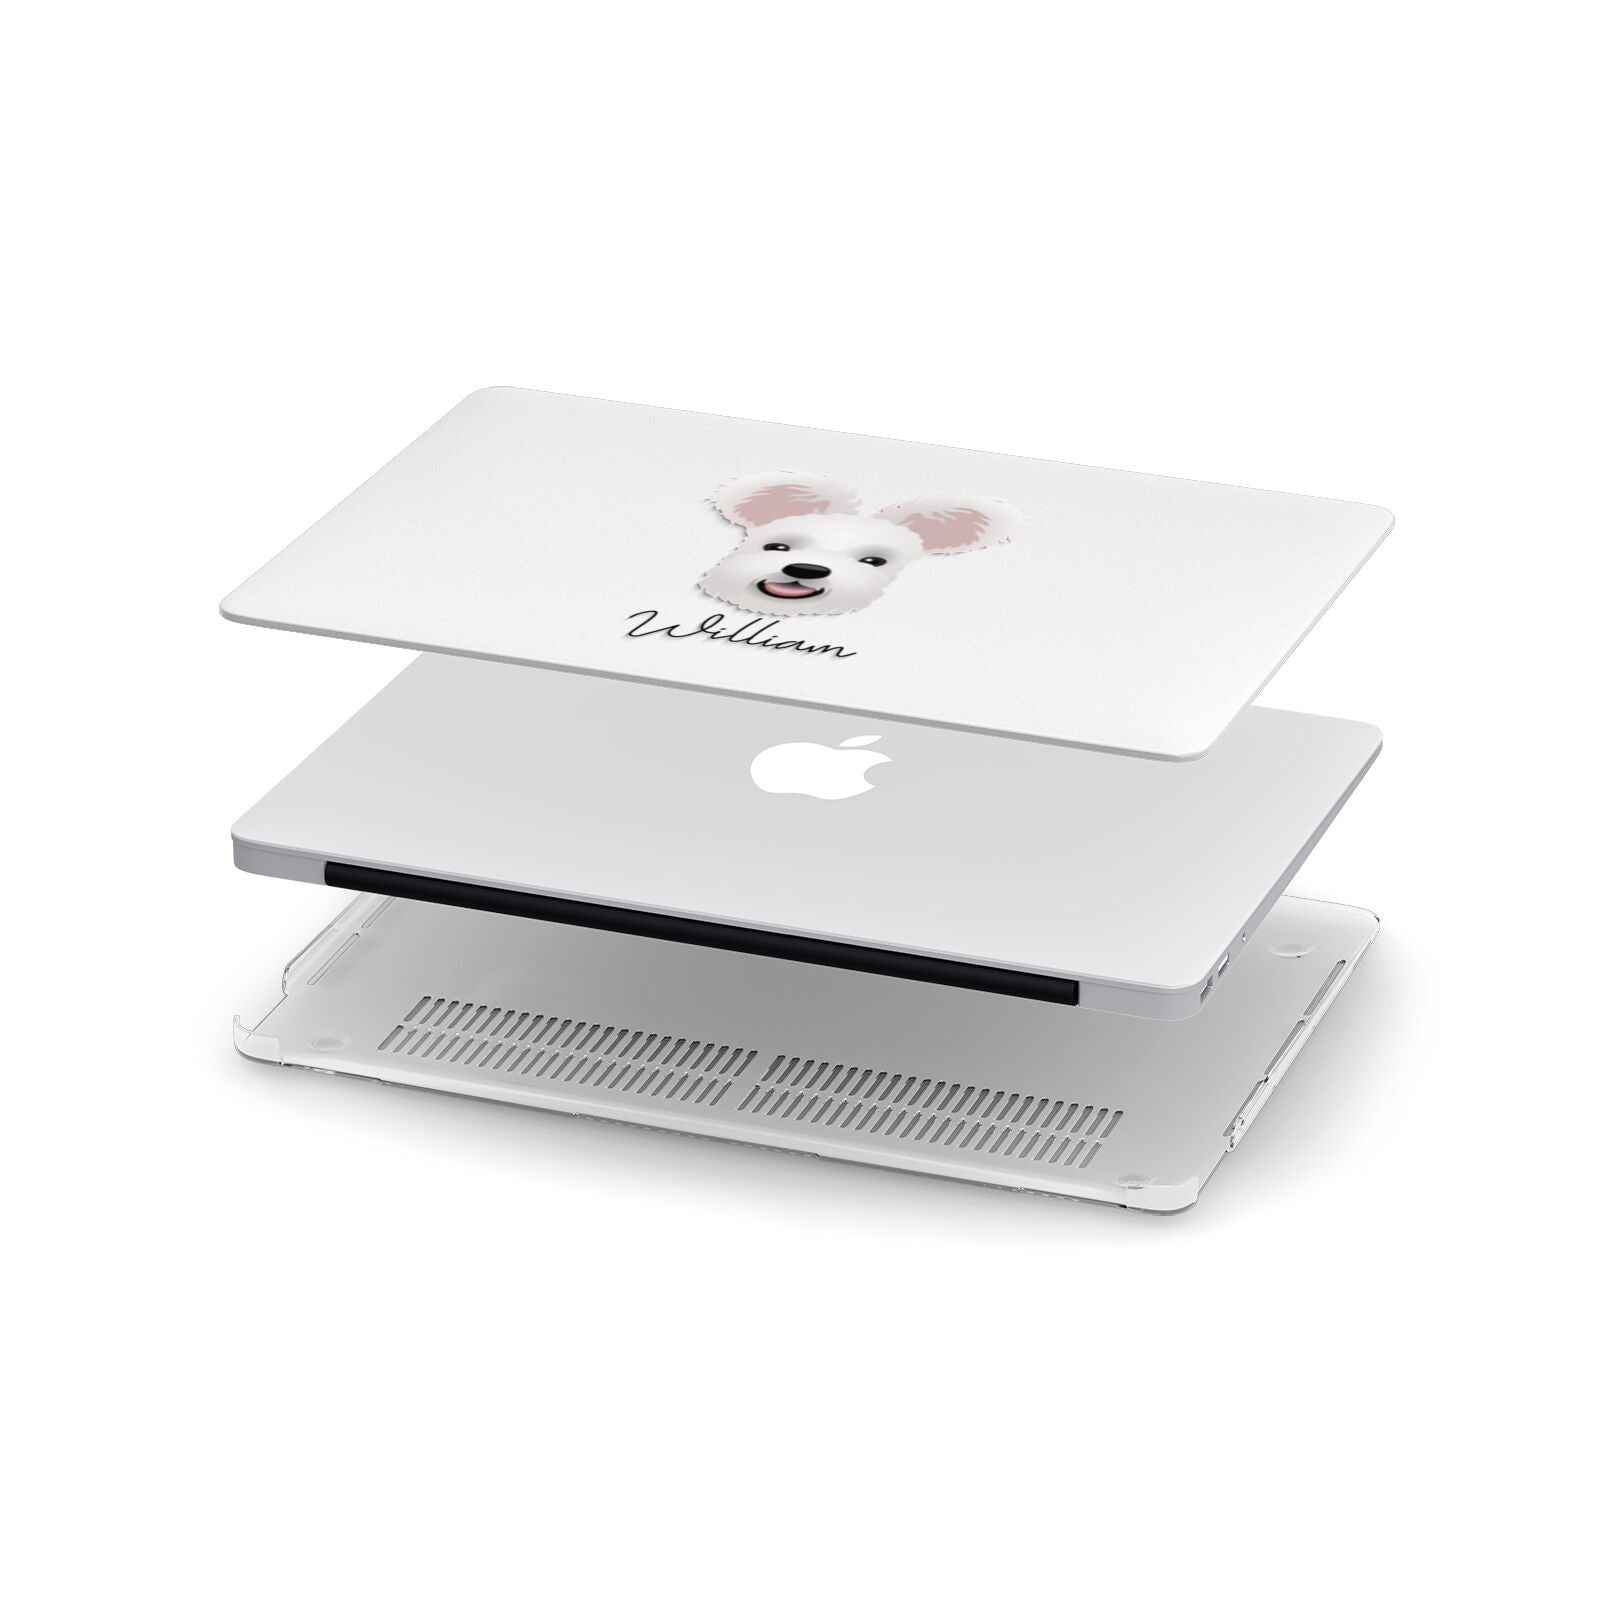 Hungarian Pumi Personalised Apple MacBook Case in Detail